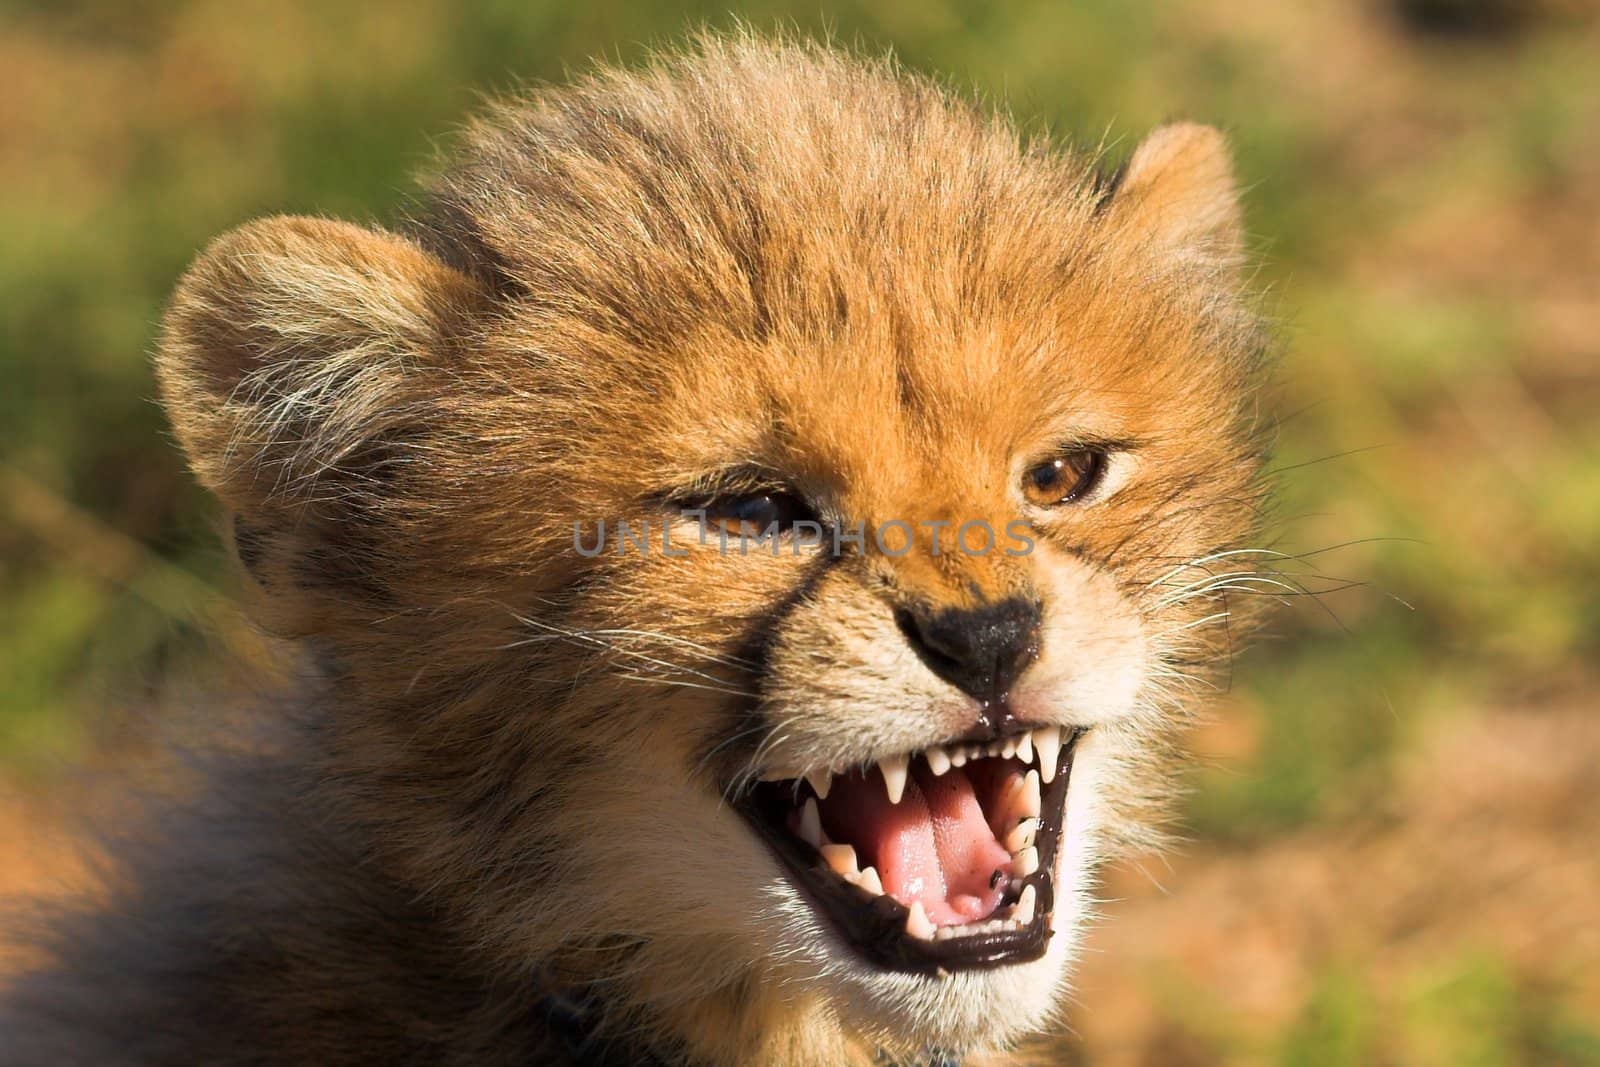 Angry cub by nightowlza